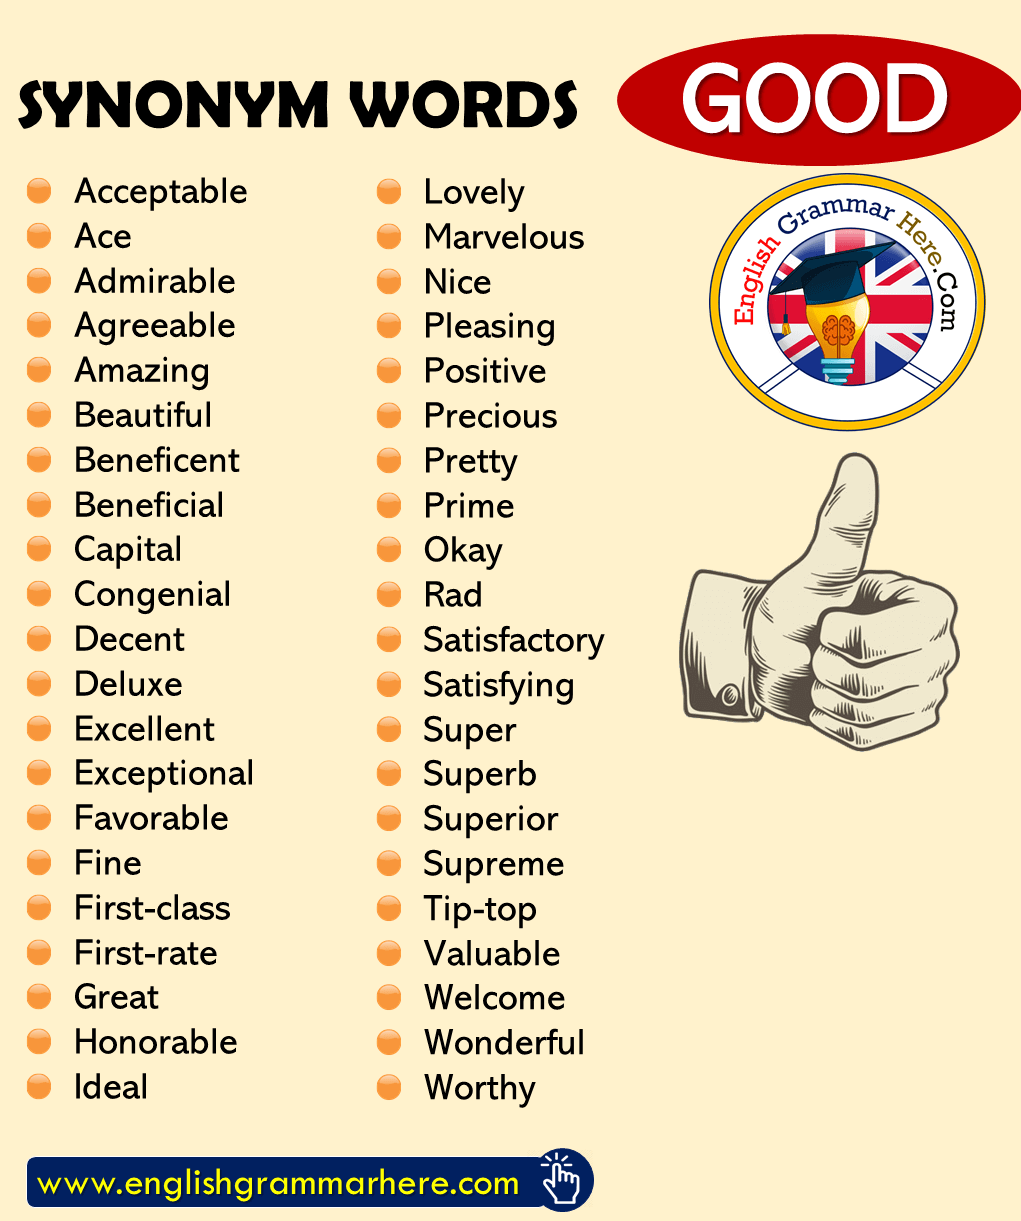 English Synonym Words with GOOD, English Vocabulary